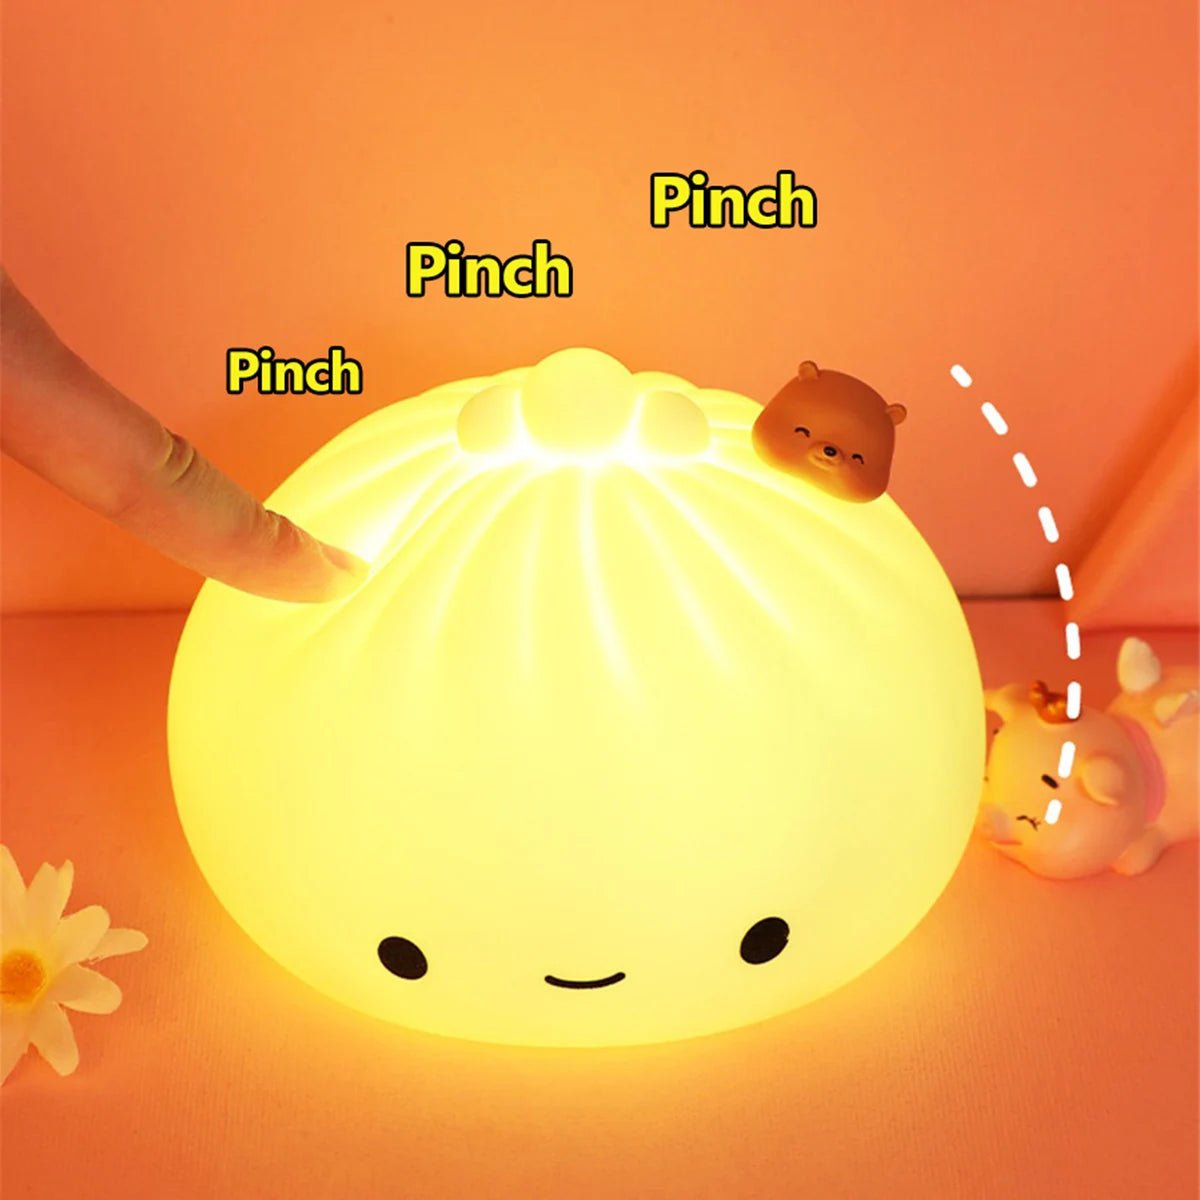 Bun Dumpling Night Light - Lamp / Lighting - Scribble Snacks